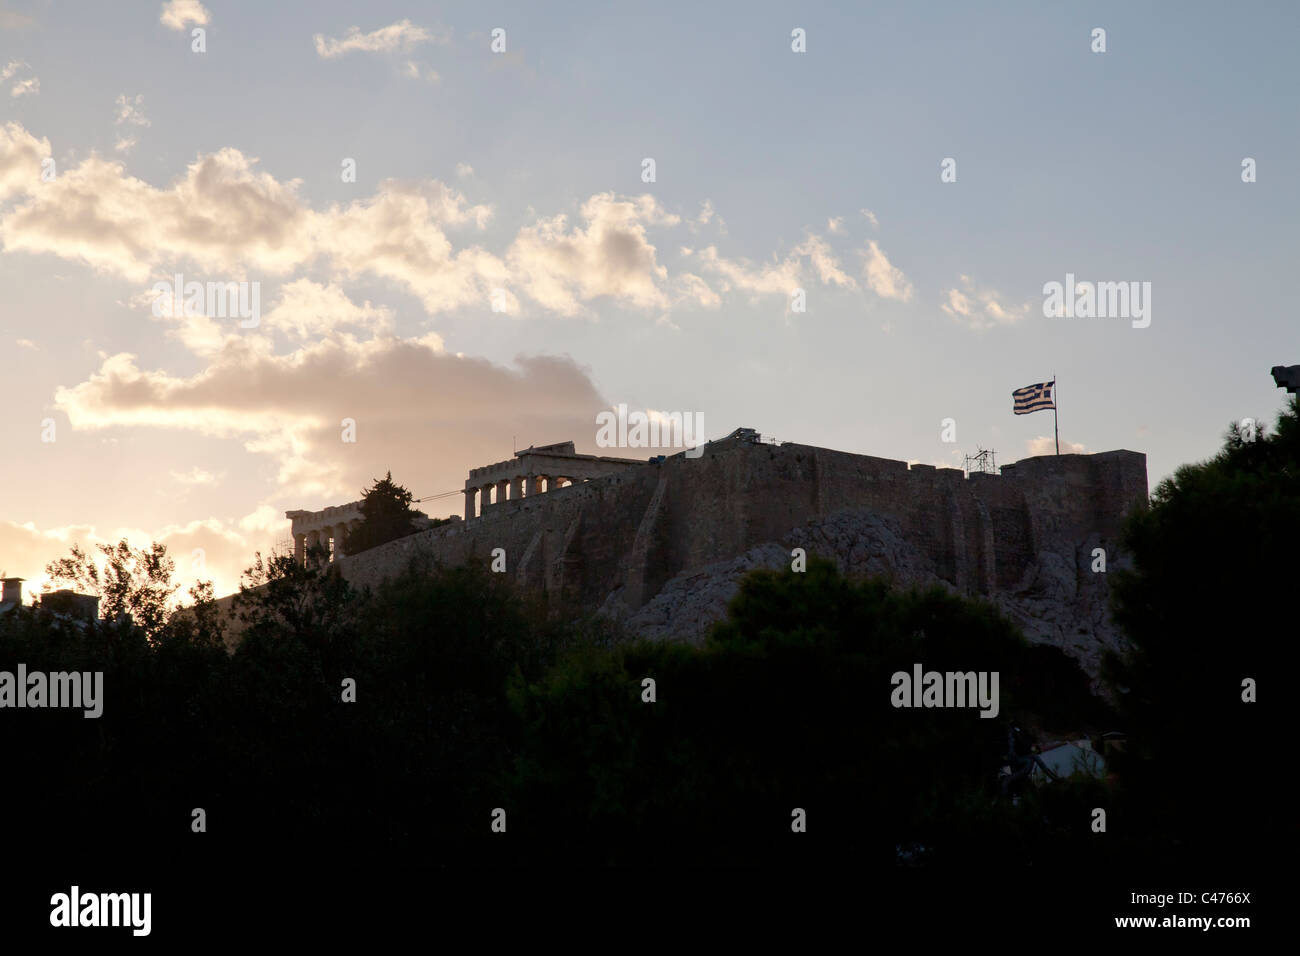 The Acropolis and the Parthenon Temple, Athens Greece Stock Photo